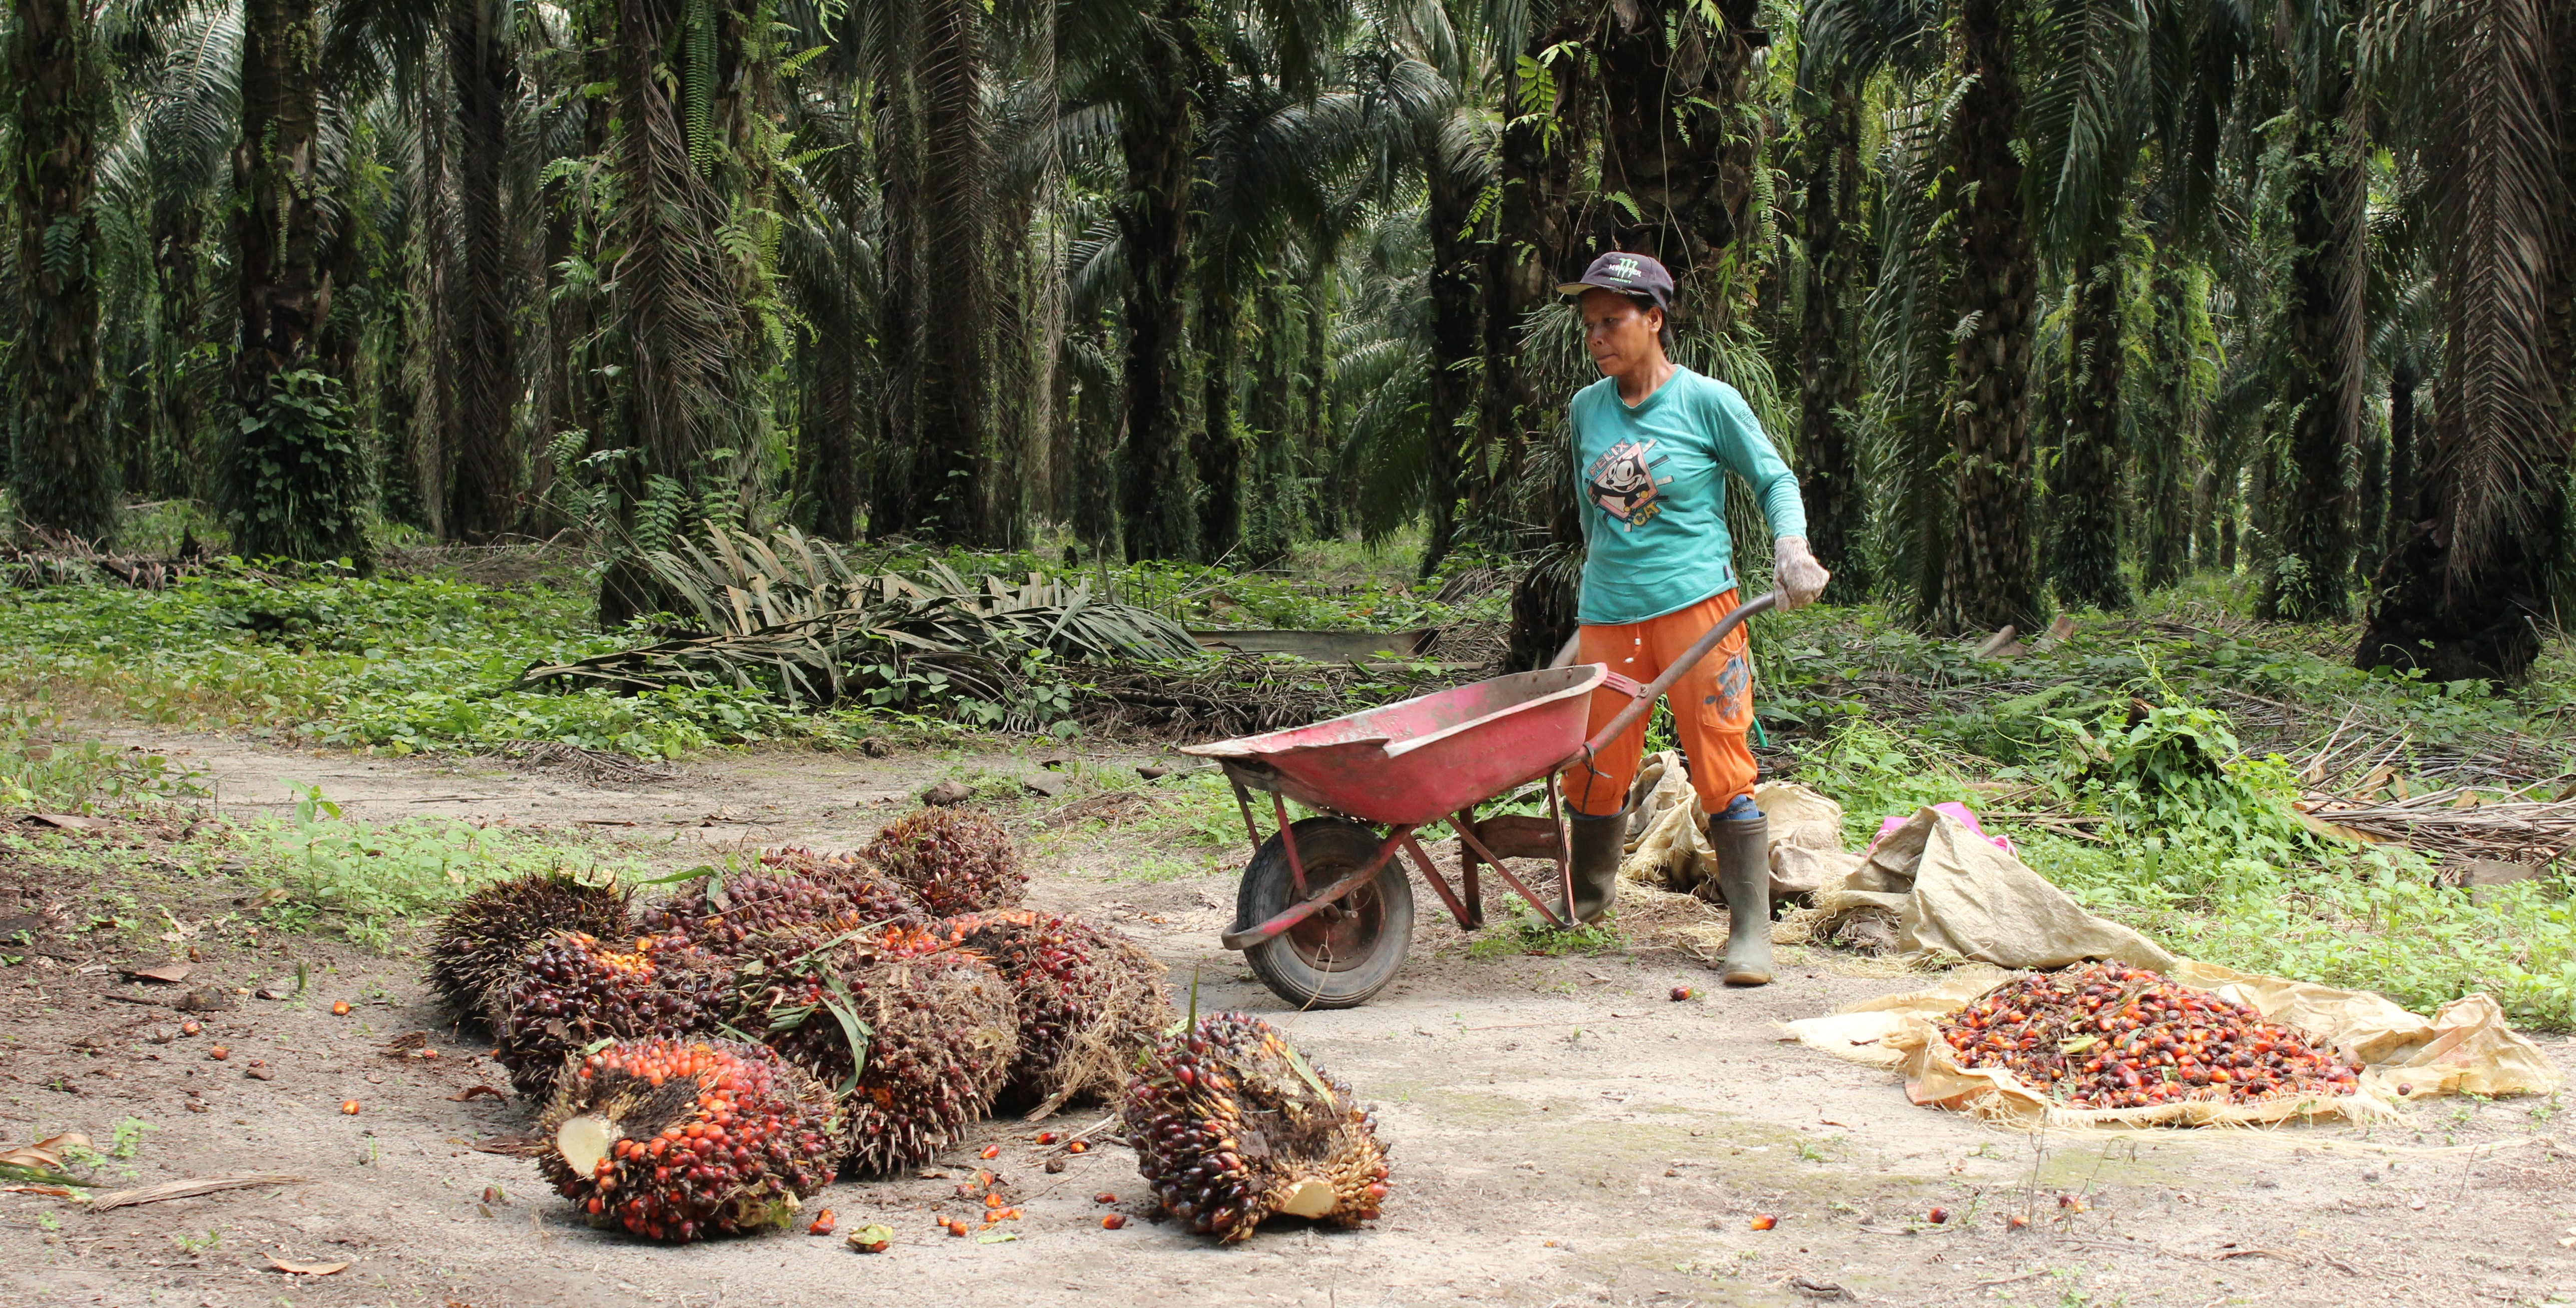 10 Worst Palm Oil Foods